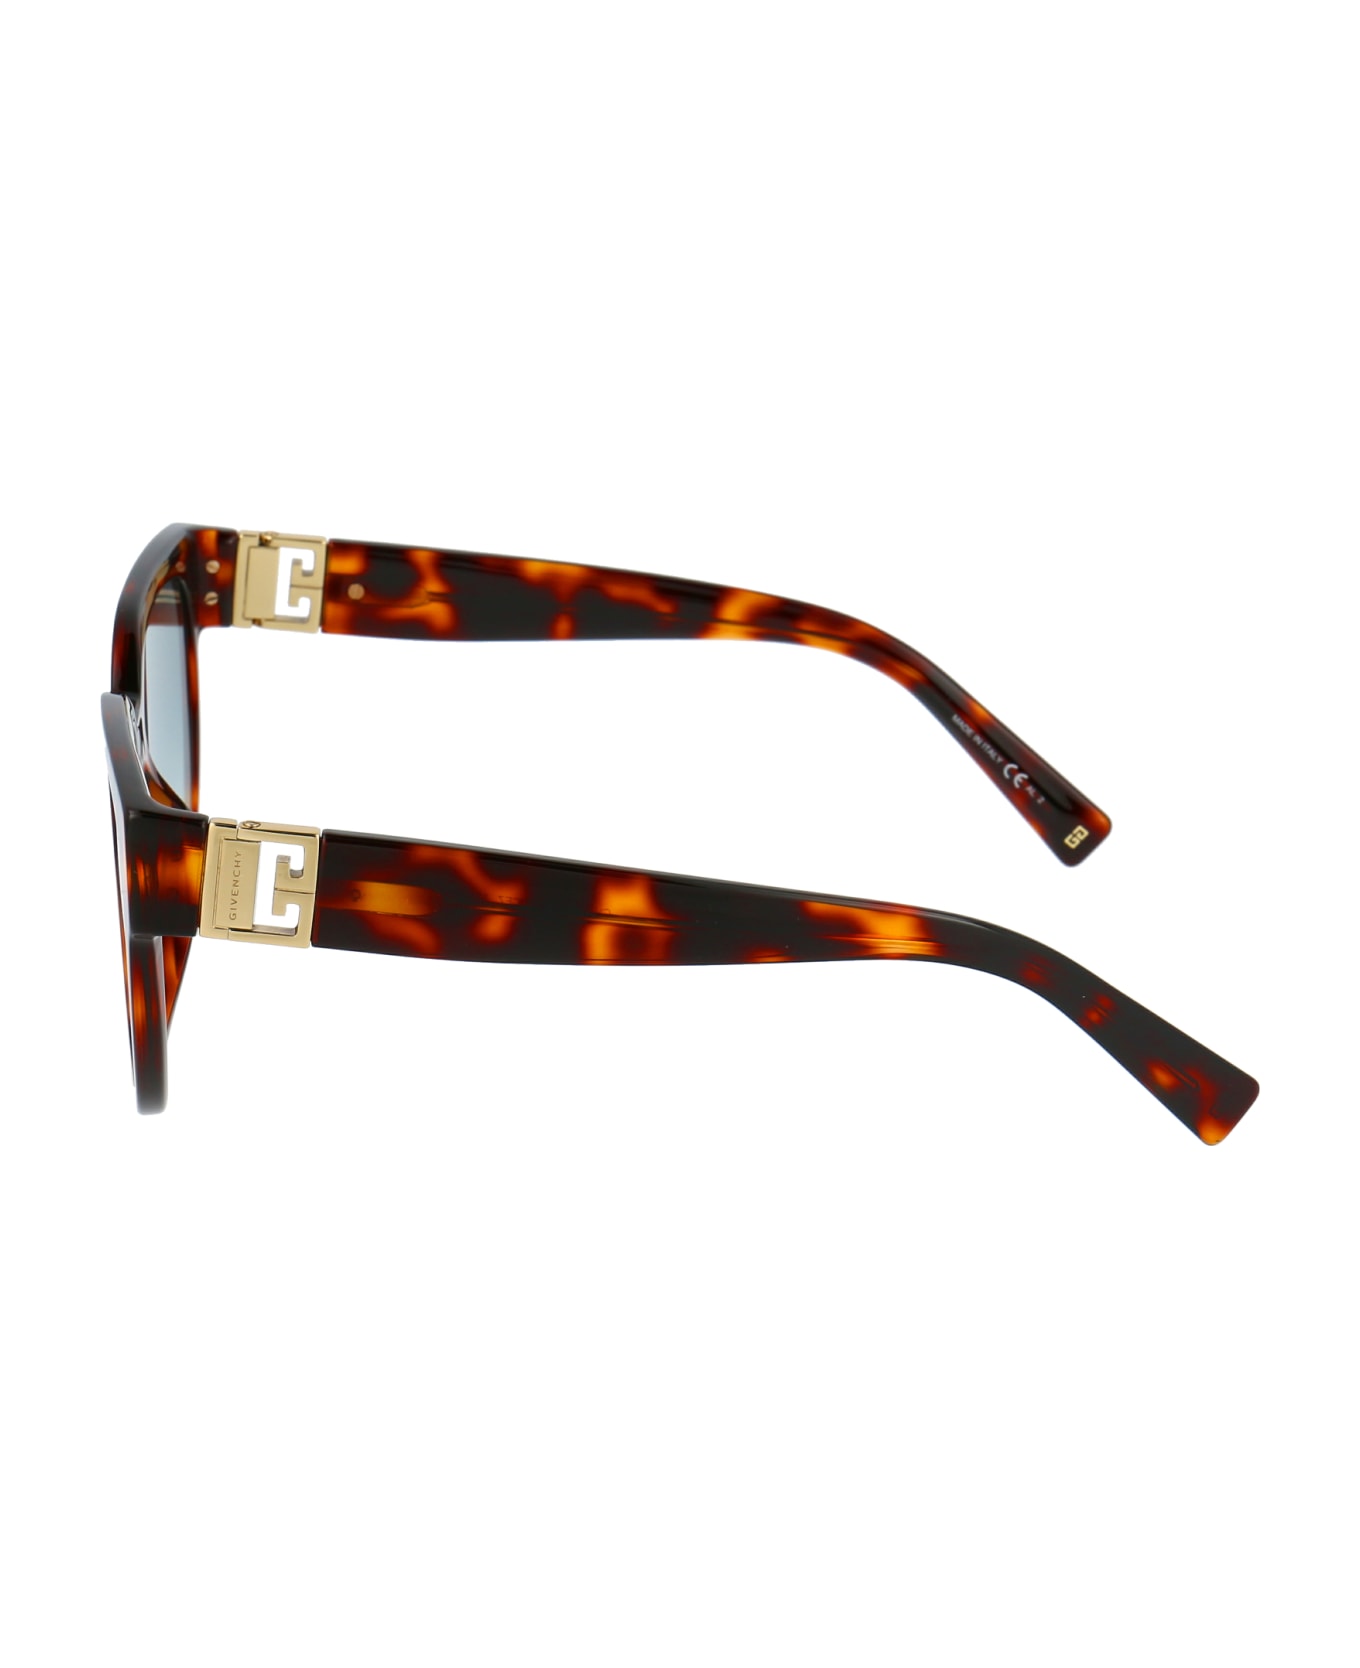 Givenchy Eyewear Gv 7155/g/s Sunglasses - 0UCEZ RED HAVNA サングラス